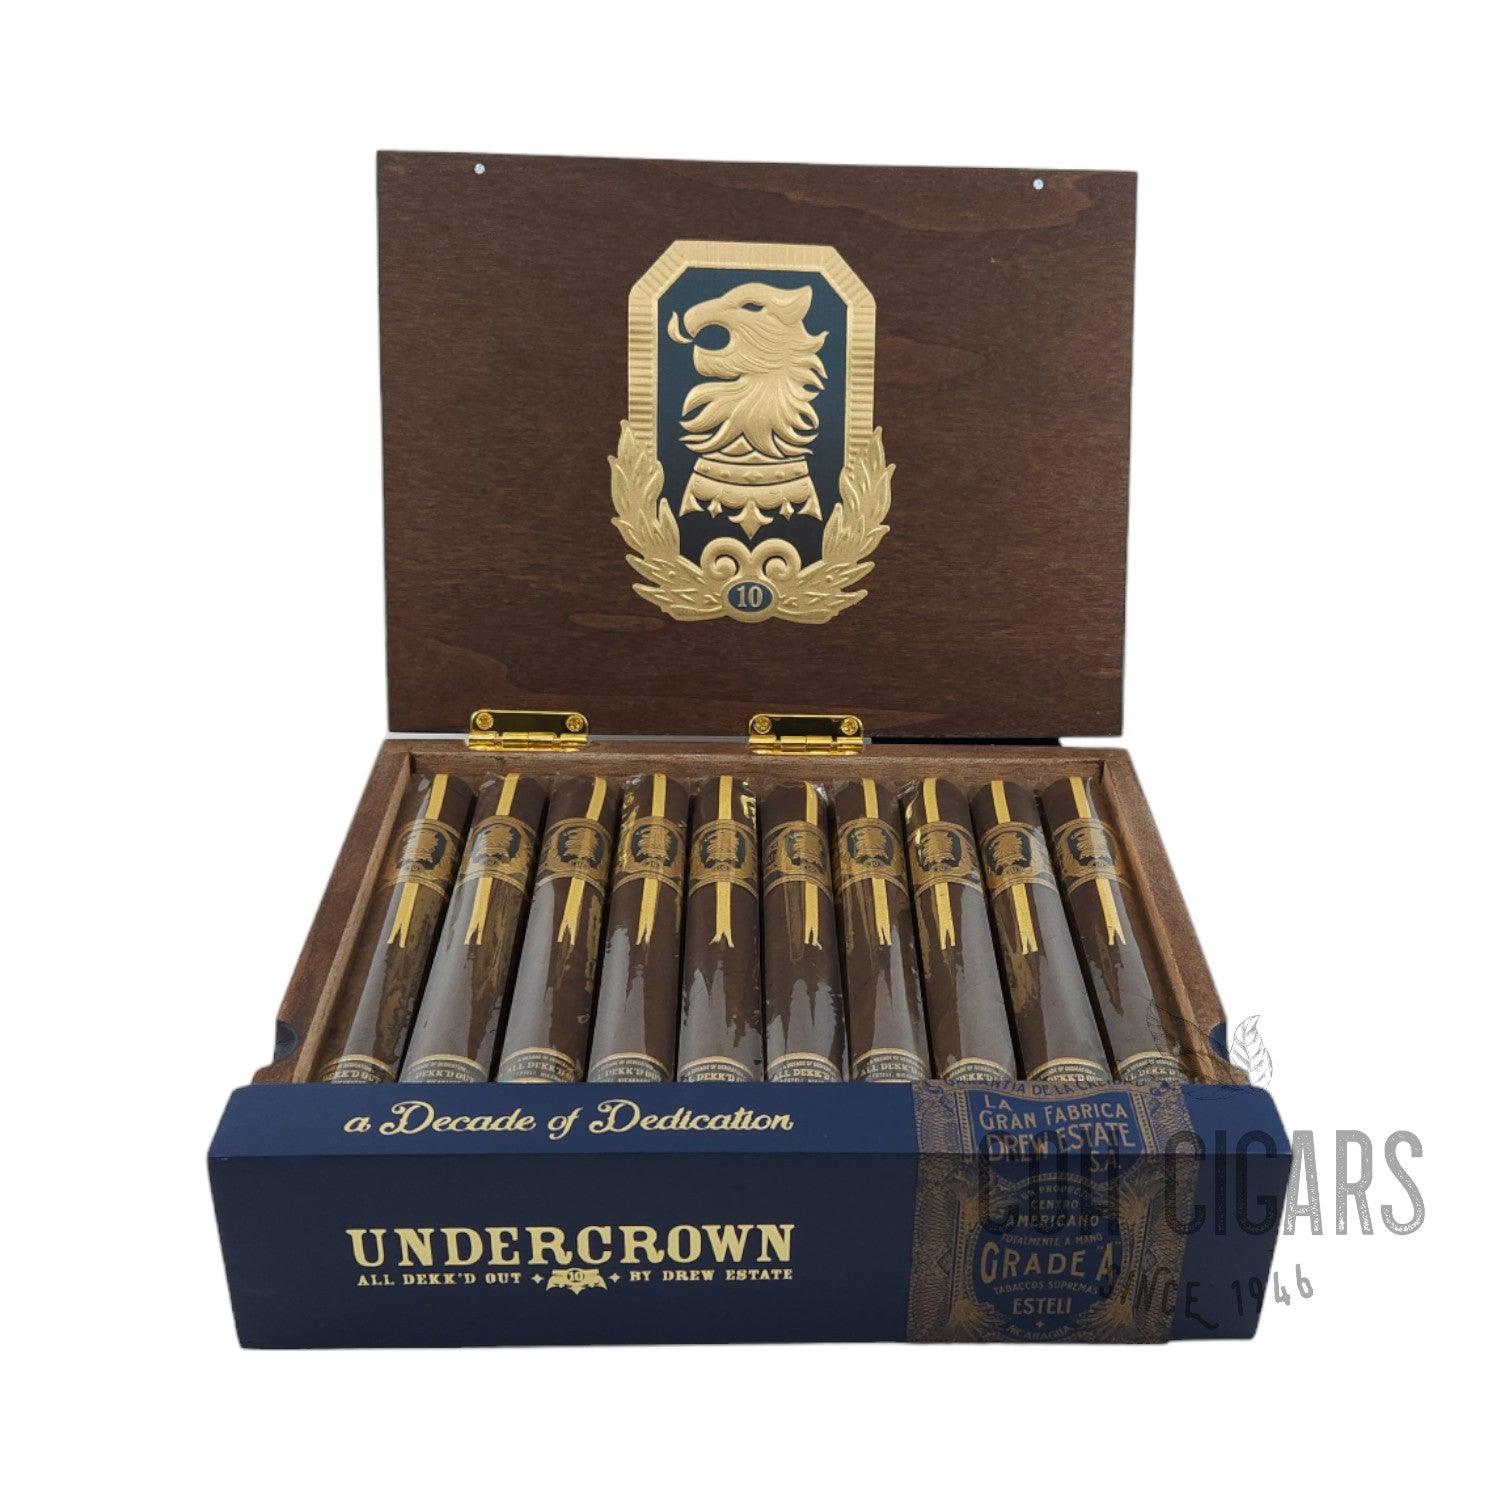 Drew Estate Cigar | Liga Undercrown 10 Toro | Box 20 - hk.cohcigars